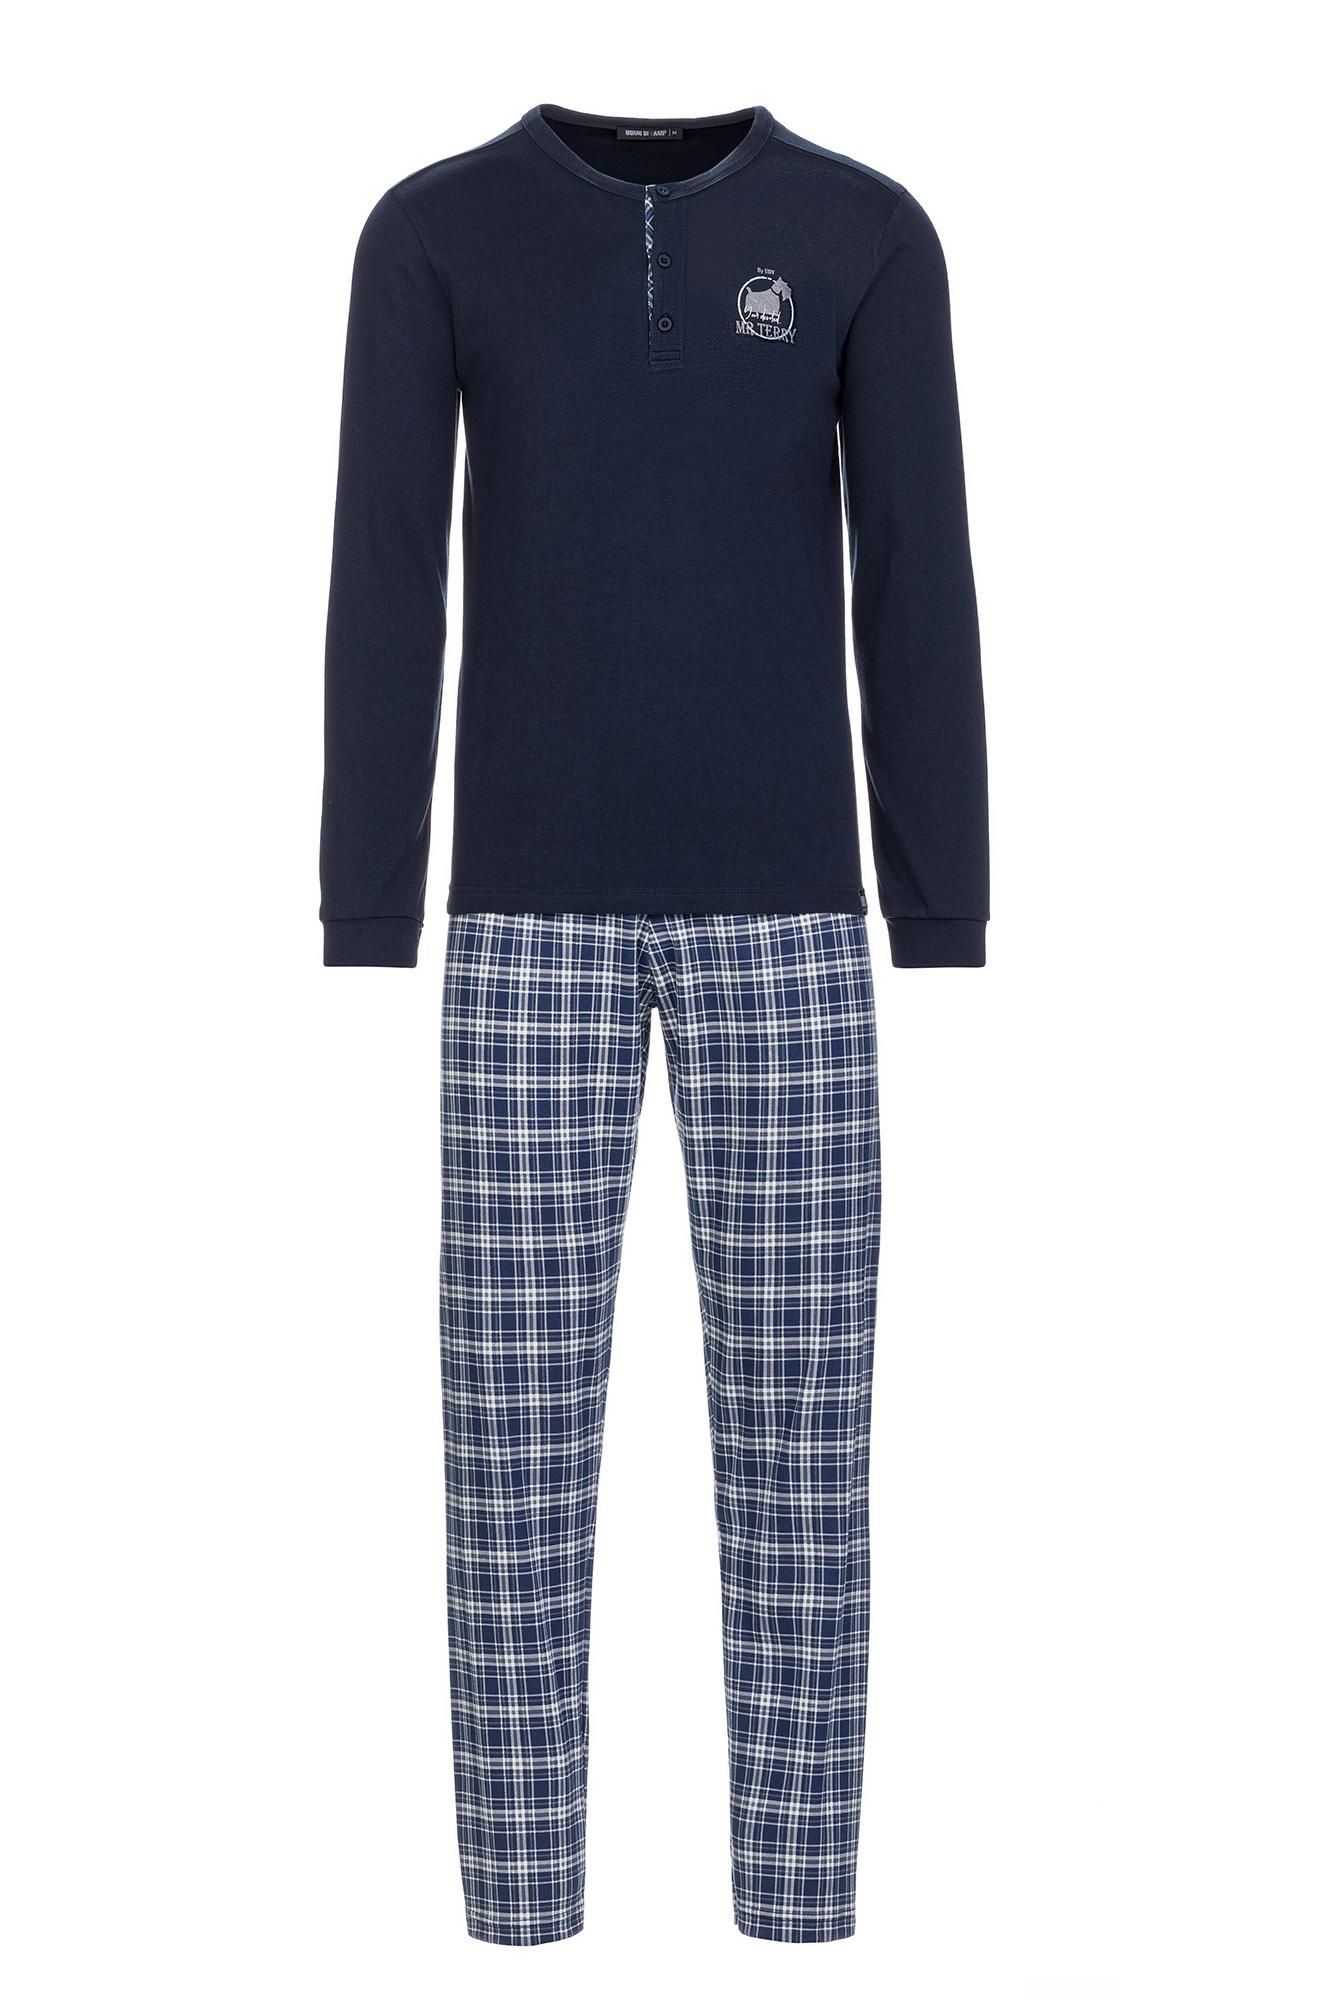 Men’s Cotton Pyjamas with Button Placket Plus sizes